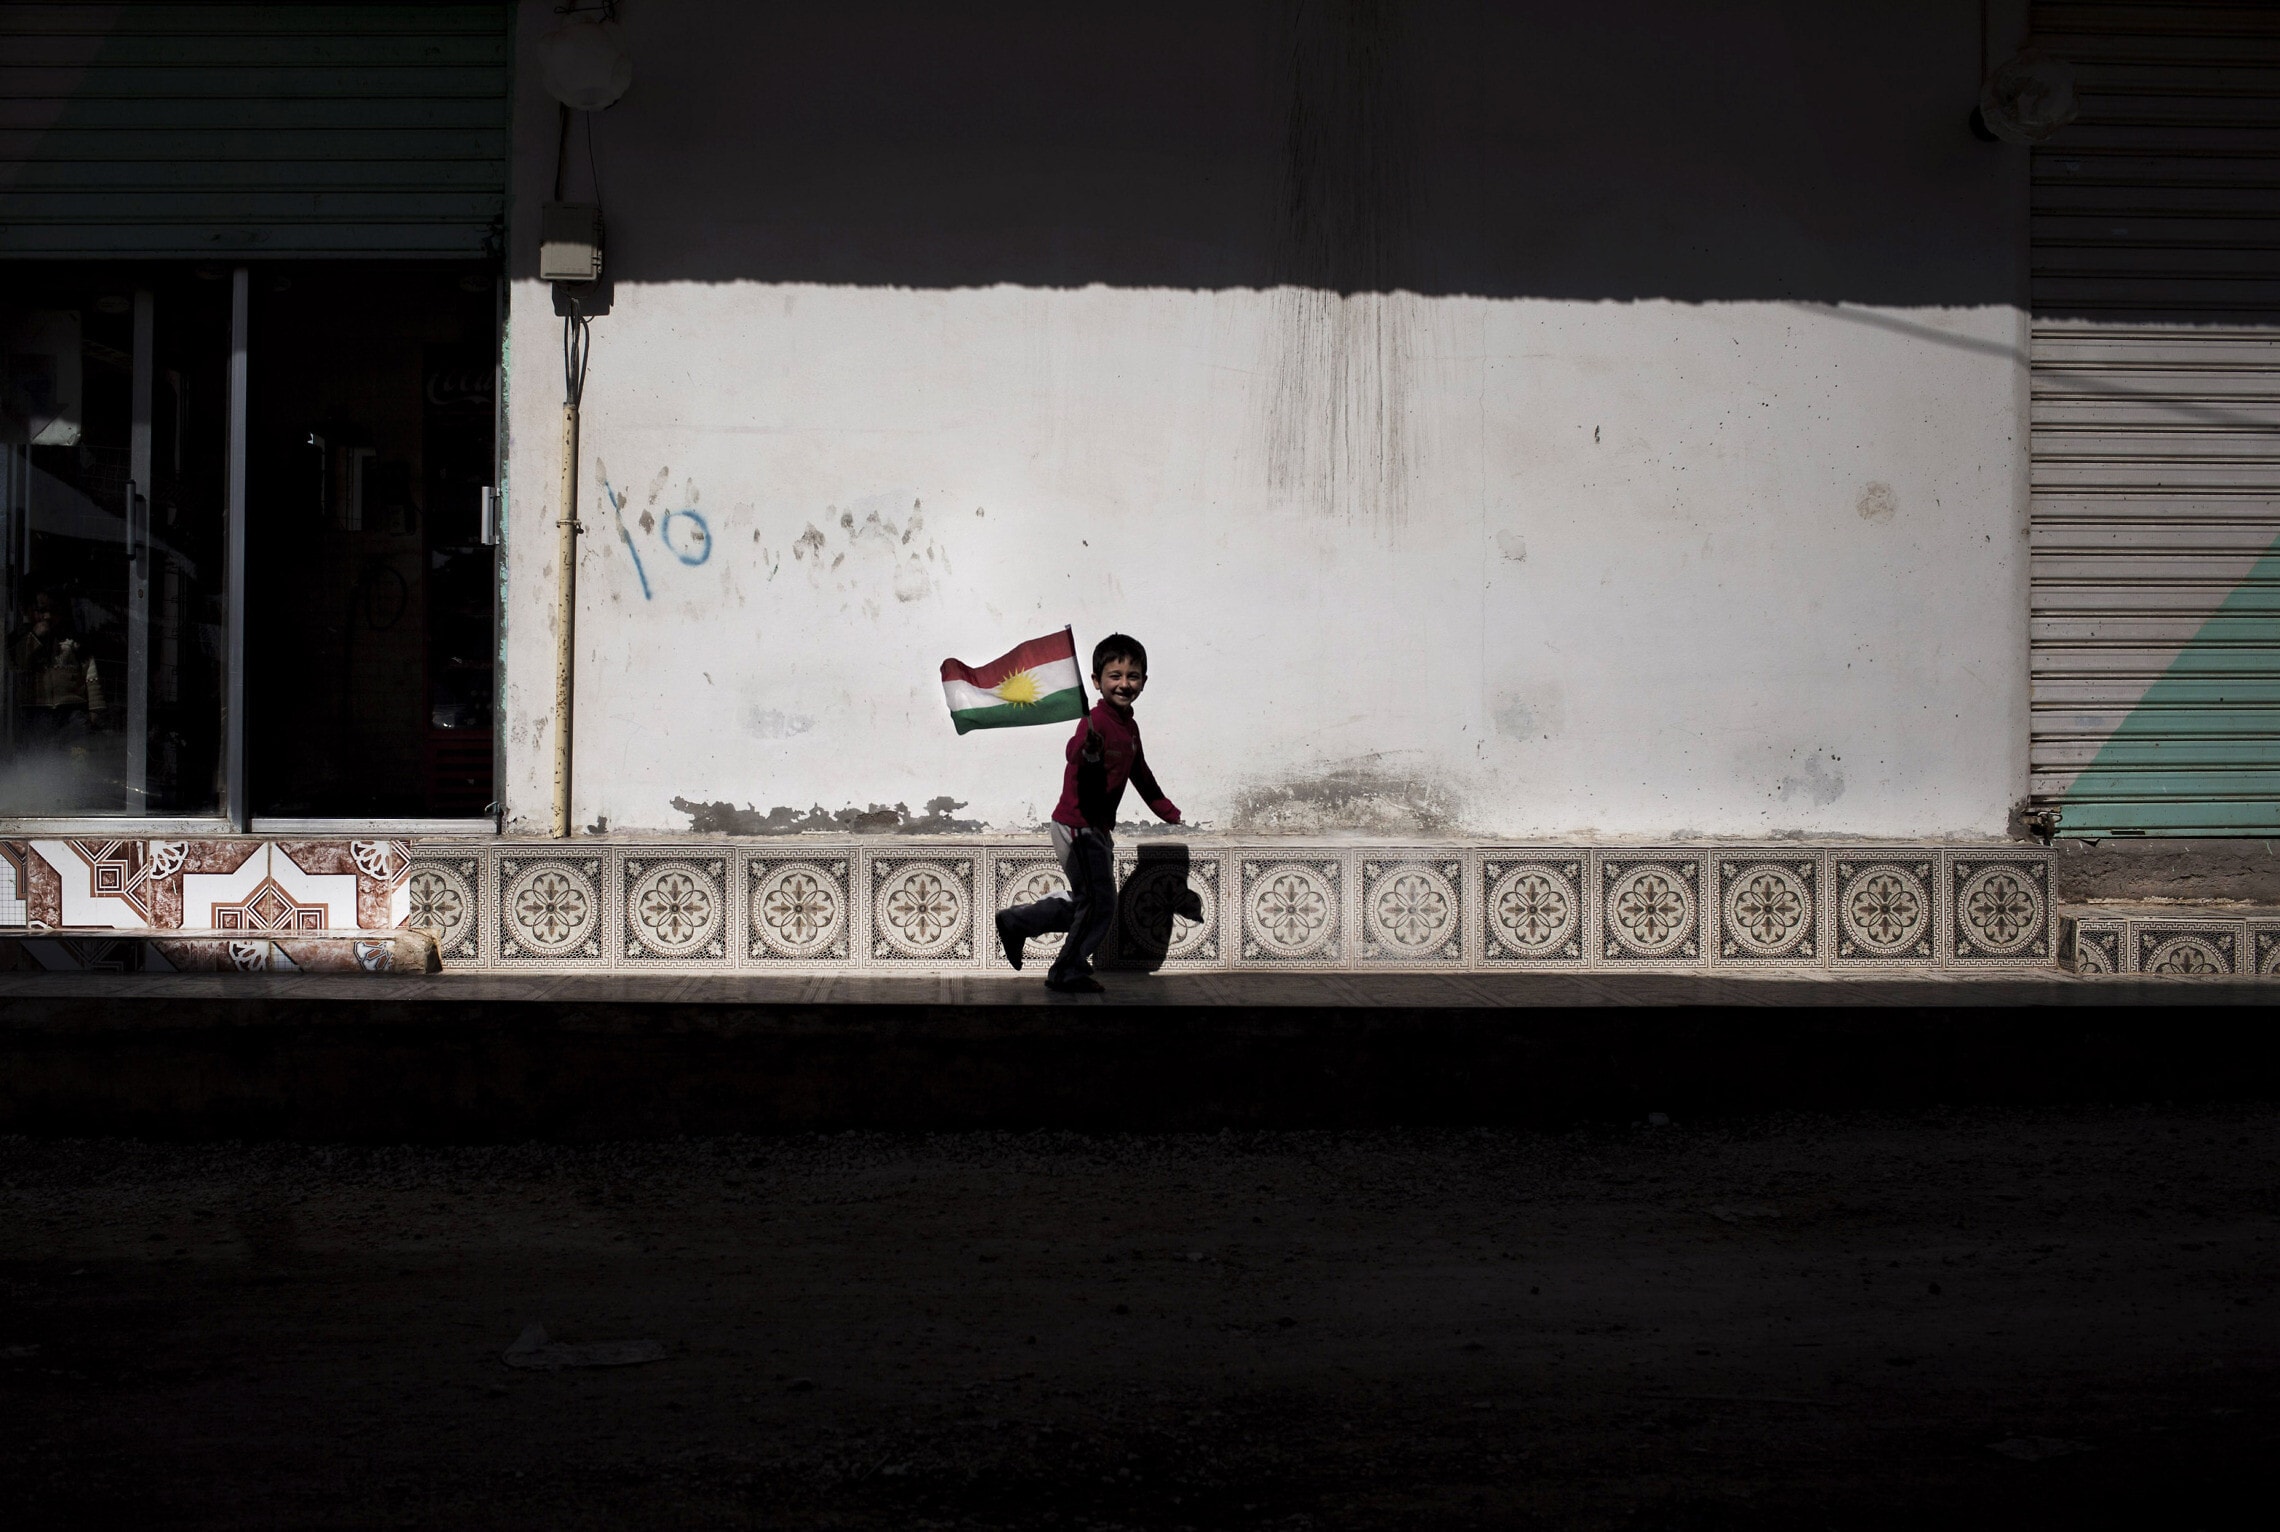 נער כורדי רץ בין חורבות ראס אל-עין, פברואר 2013 (צילום: AP Photo/Manu Brabo)